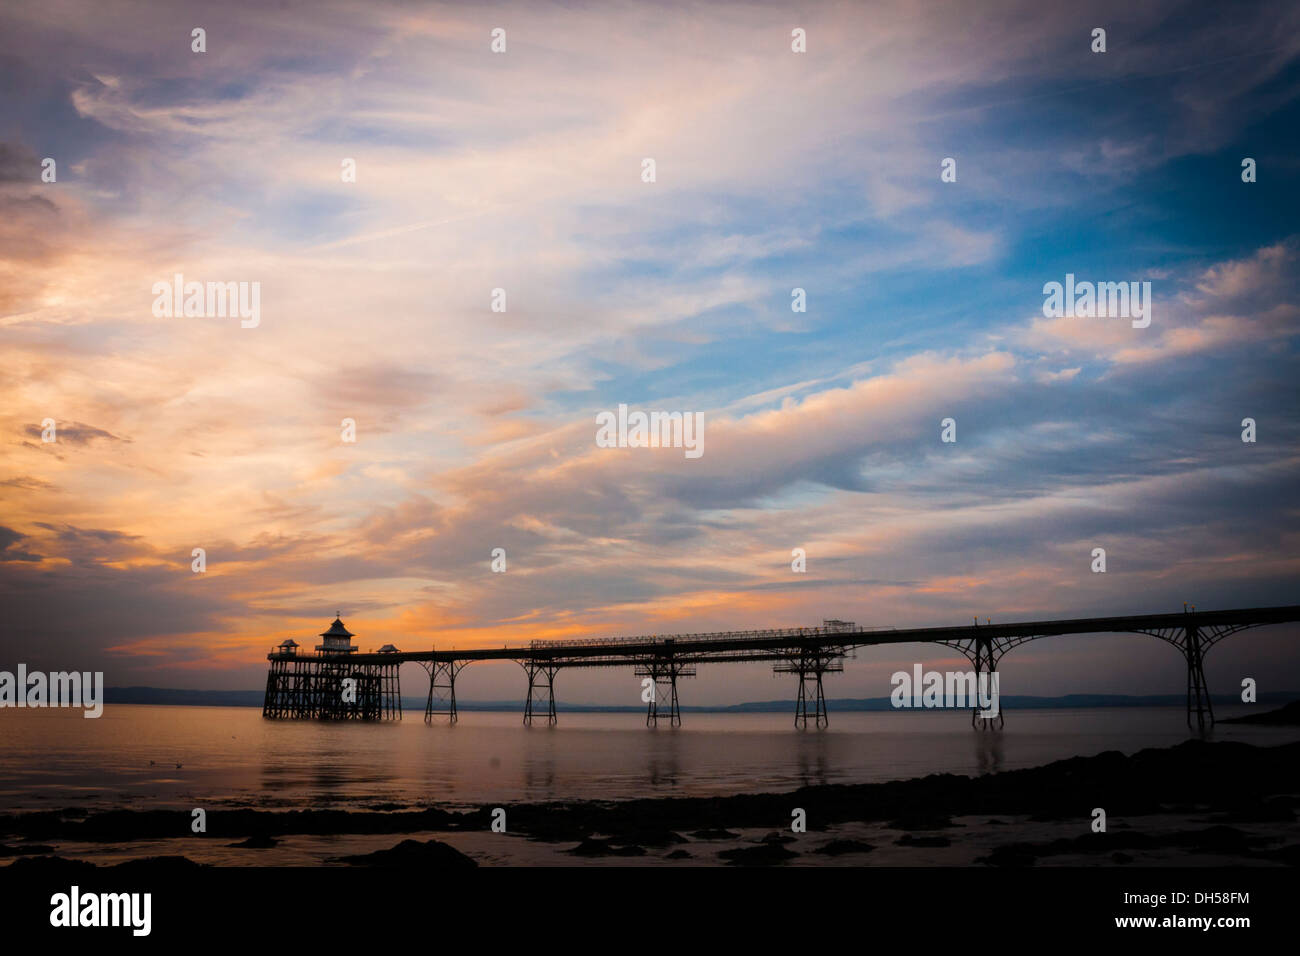 clevedon-pier-at-sunset-the-pier-was-des